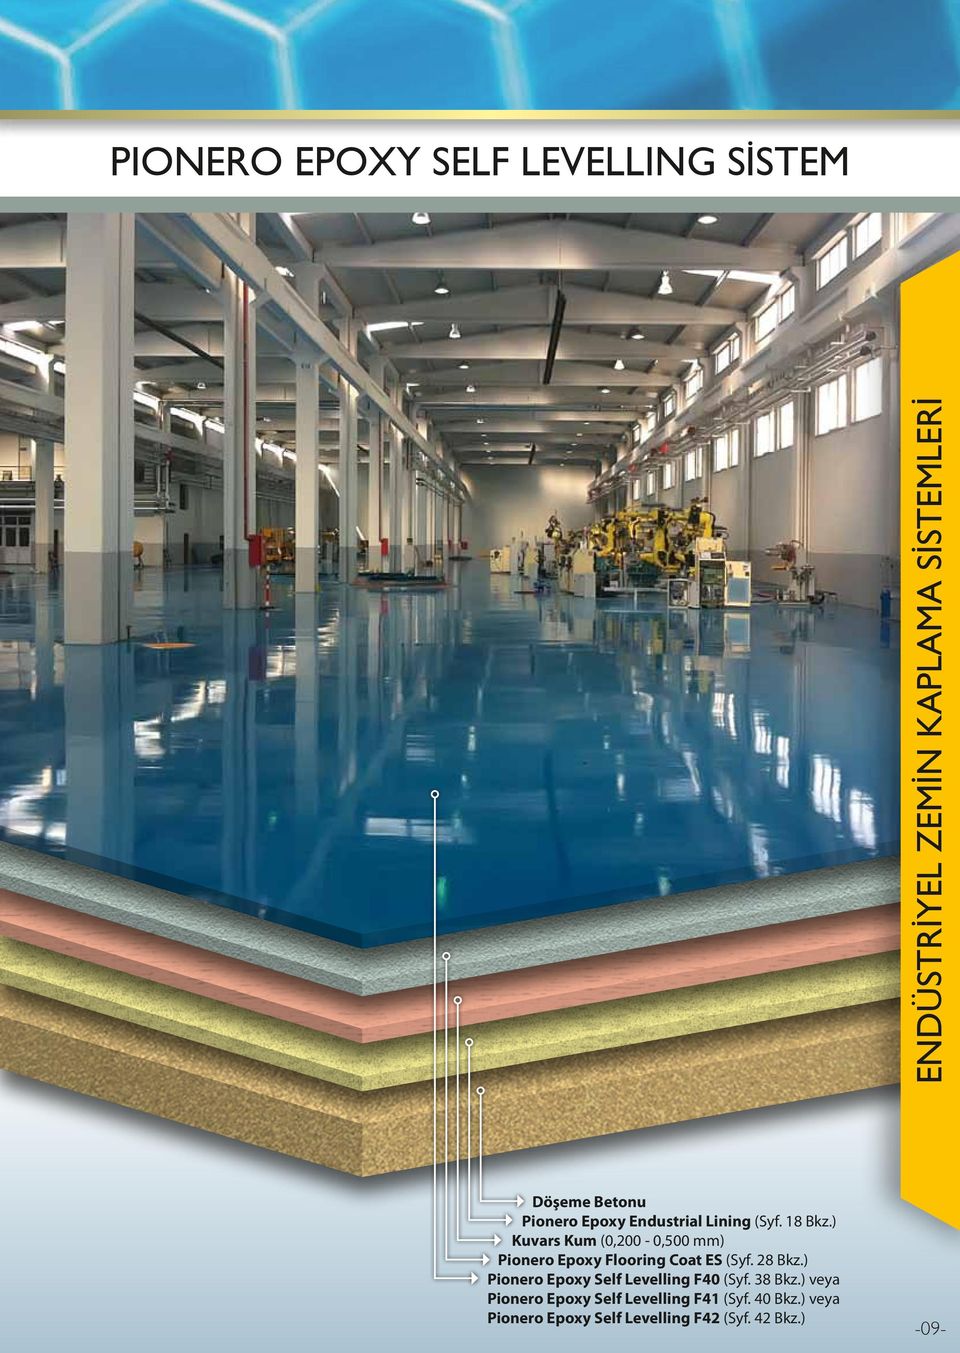 ) Kuvars Kum (0,200-0,500 mm) Pionero Epoxy Flooring Coat ES (Syf. 28 Bkz.